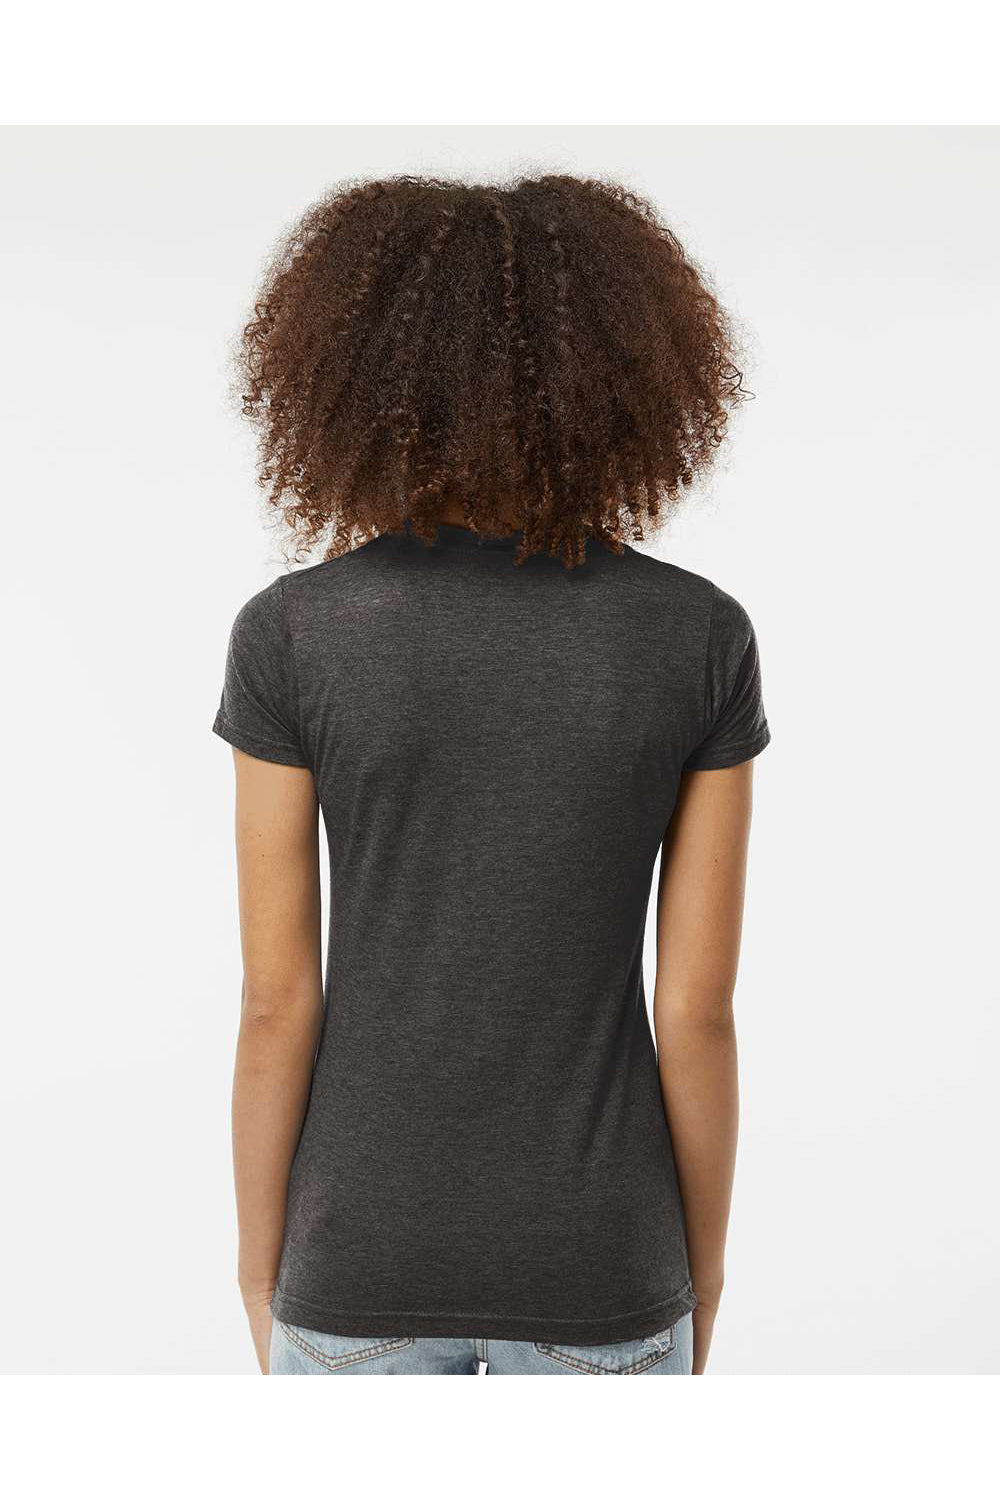 Tultex 240 Womens Poly-Rich Short Sleeve Crewneck T-Shirt Heather Graphite Grey Model Back